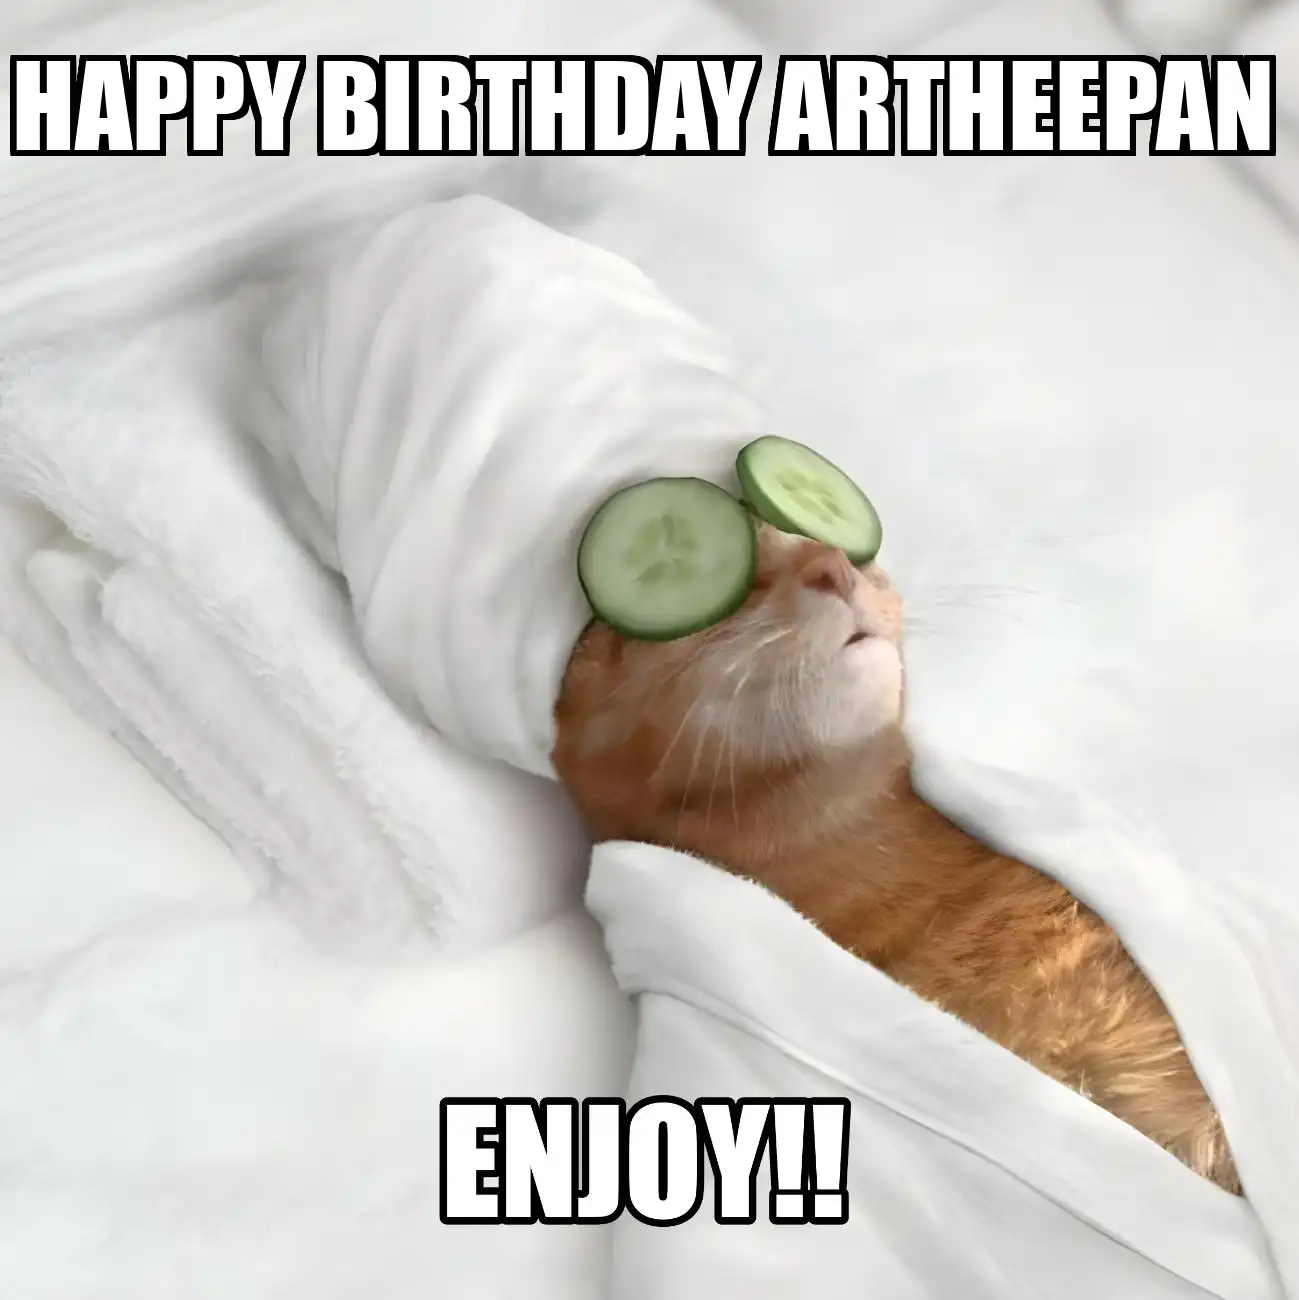 Happy Birthday Artheepan Enjoy Cat Meme